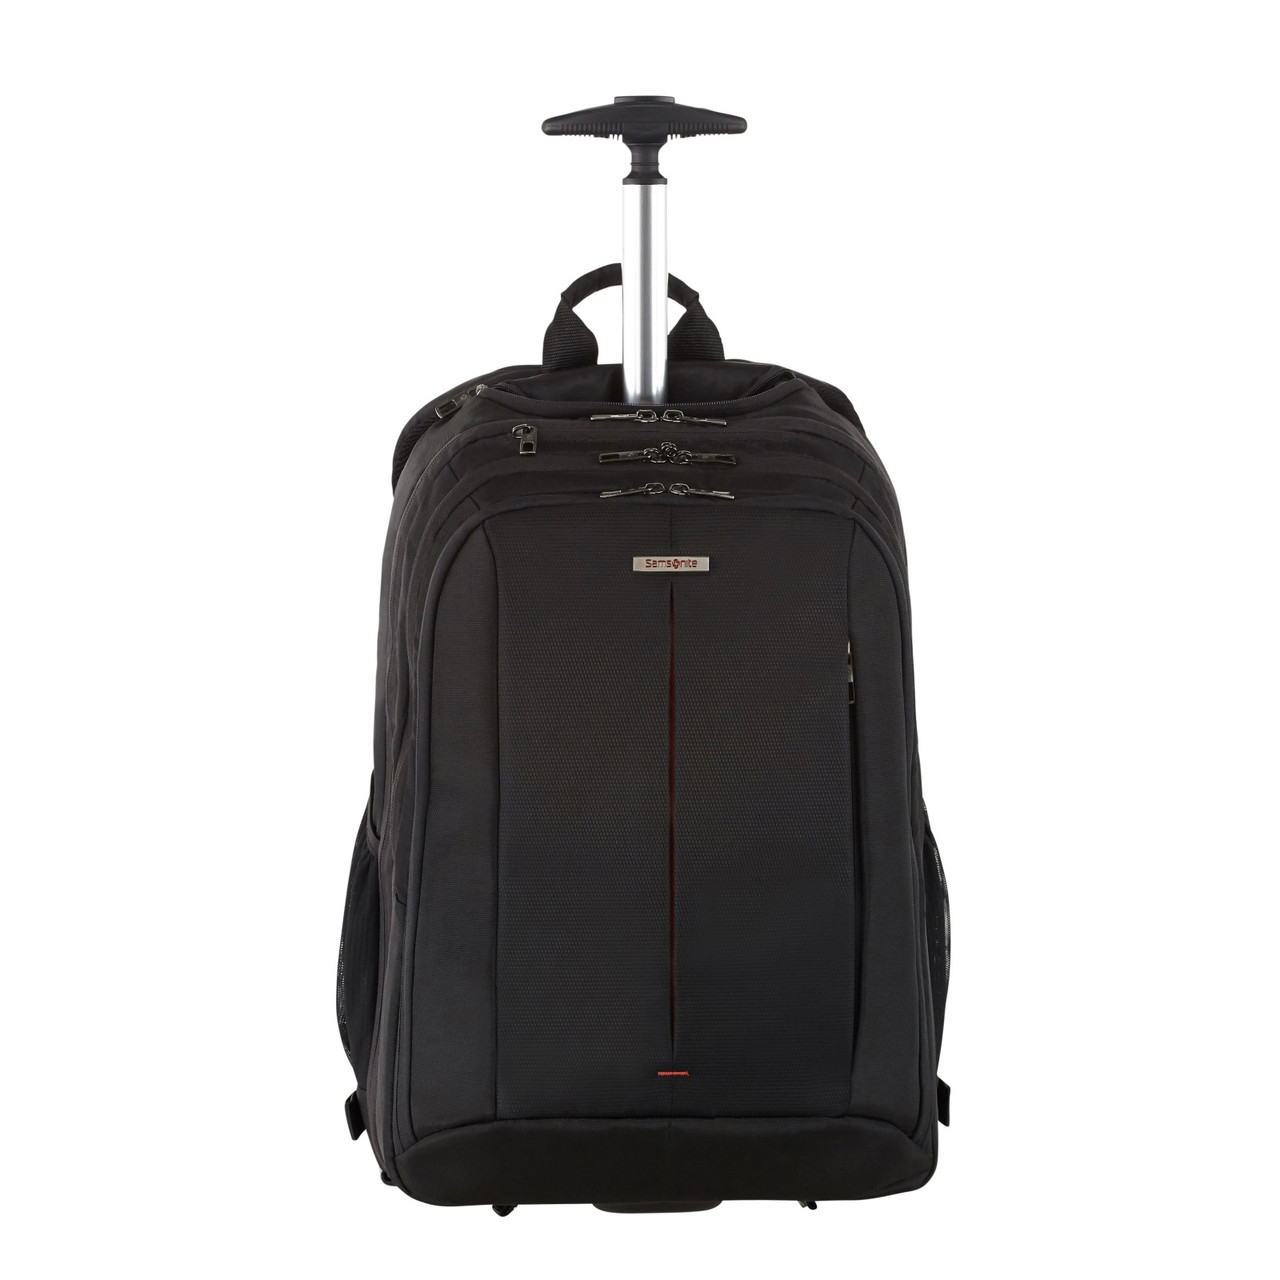 Samsonite GuardIT 2.0 15.6" Laptop Wheeled Backpack at Luggage Superstore